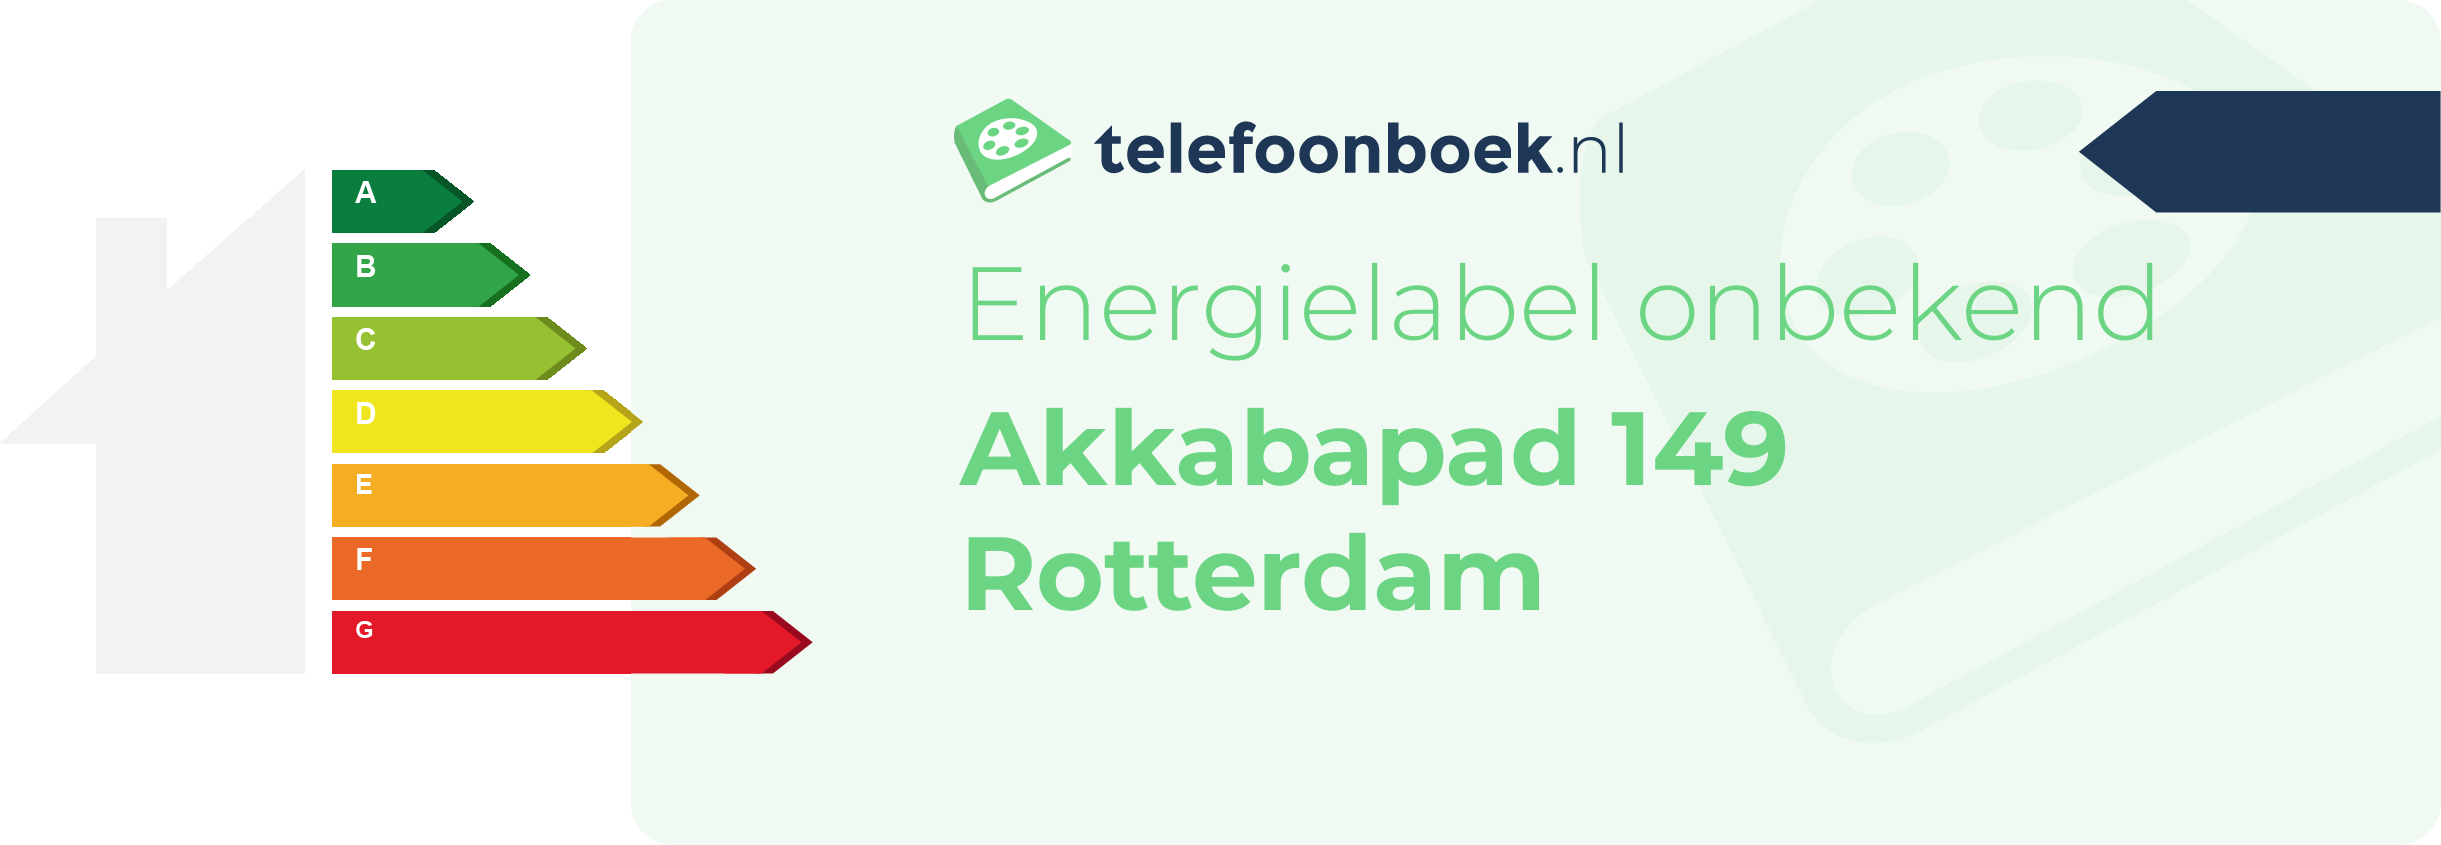 Energielabel Akkabapad 149 Rotterdam